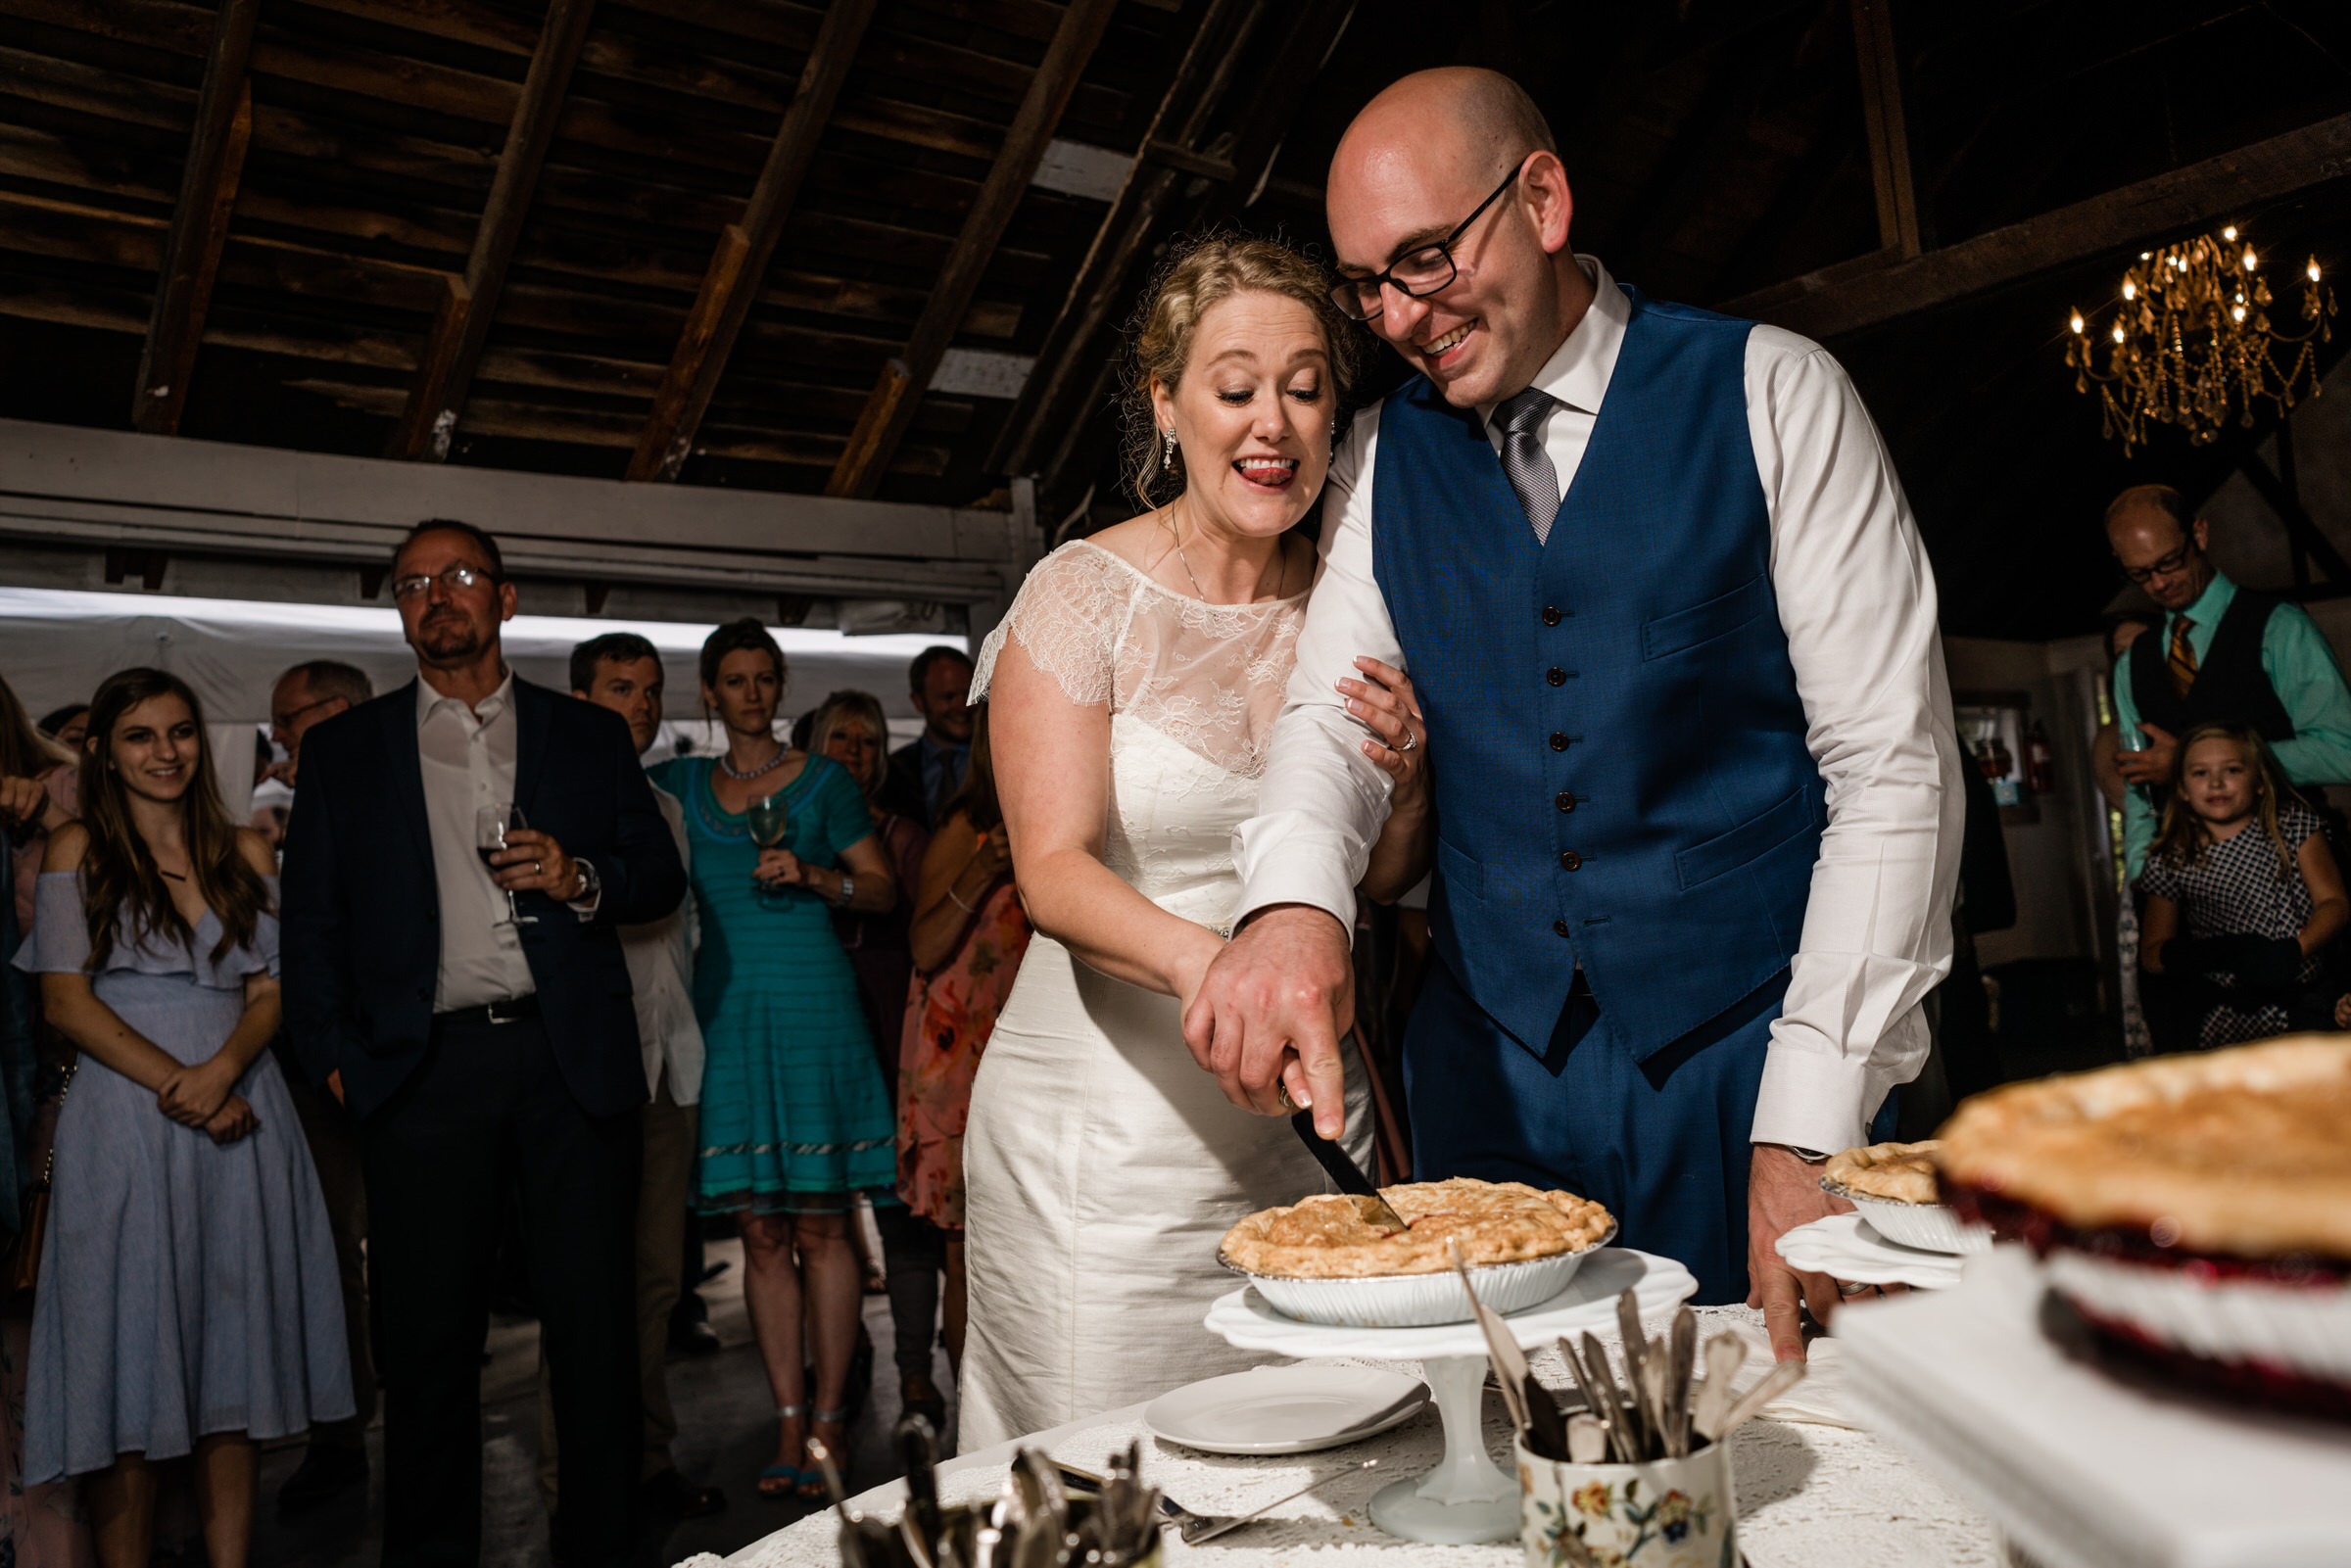 Wayfarer Whidbey Island Wedding: Sara and Joe cut into their wedding pie as husband and wife!